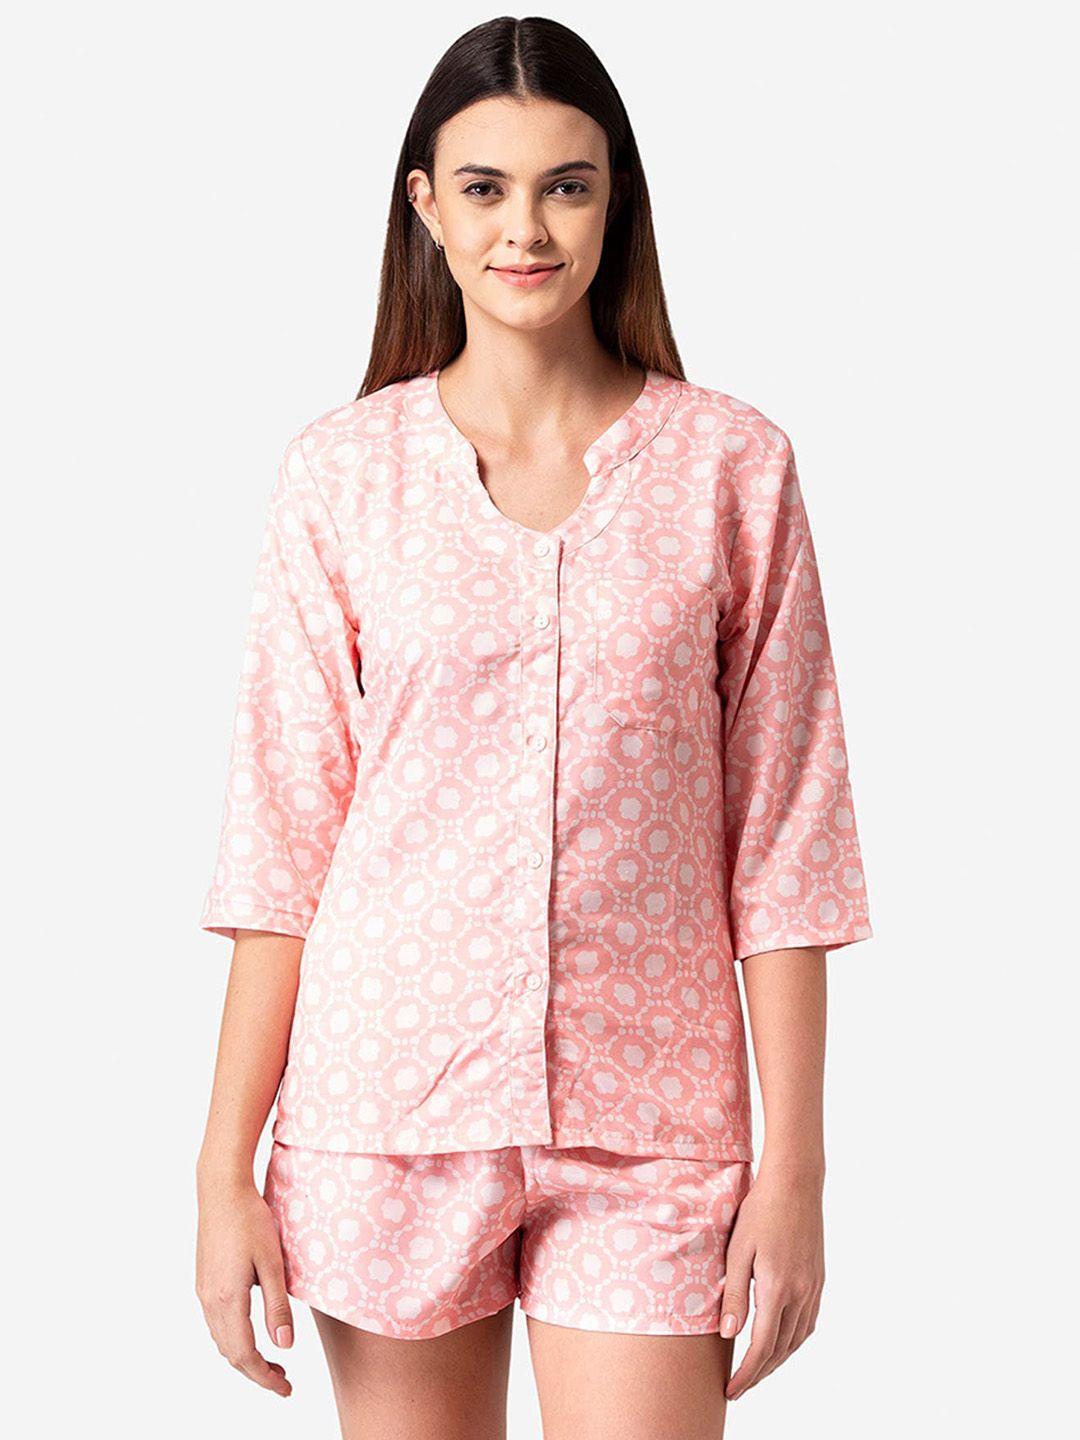 bellofox women pink & white printed pure cotton night suit